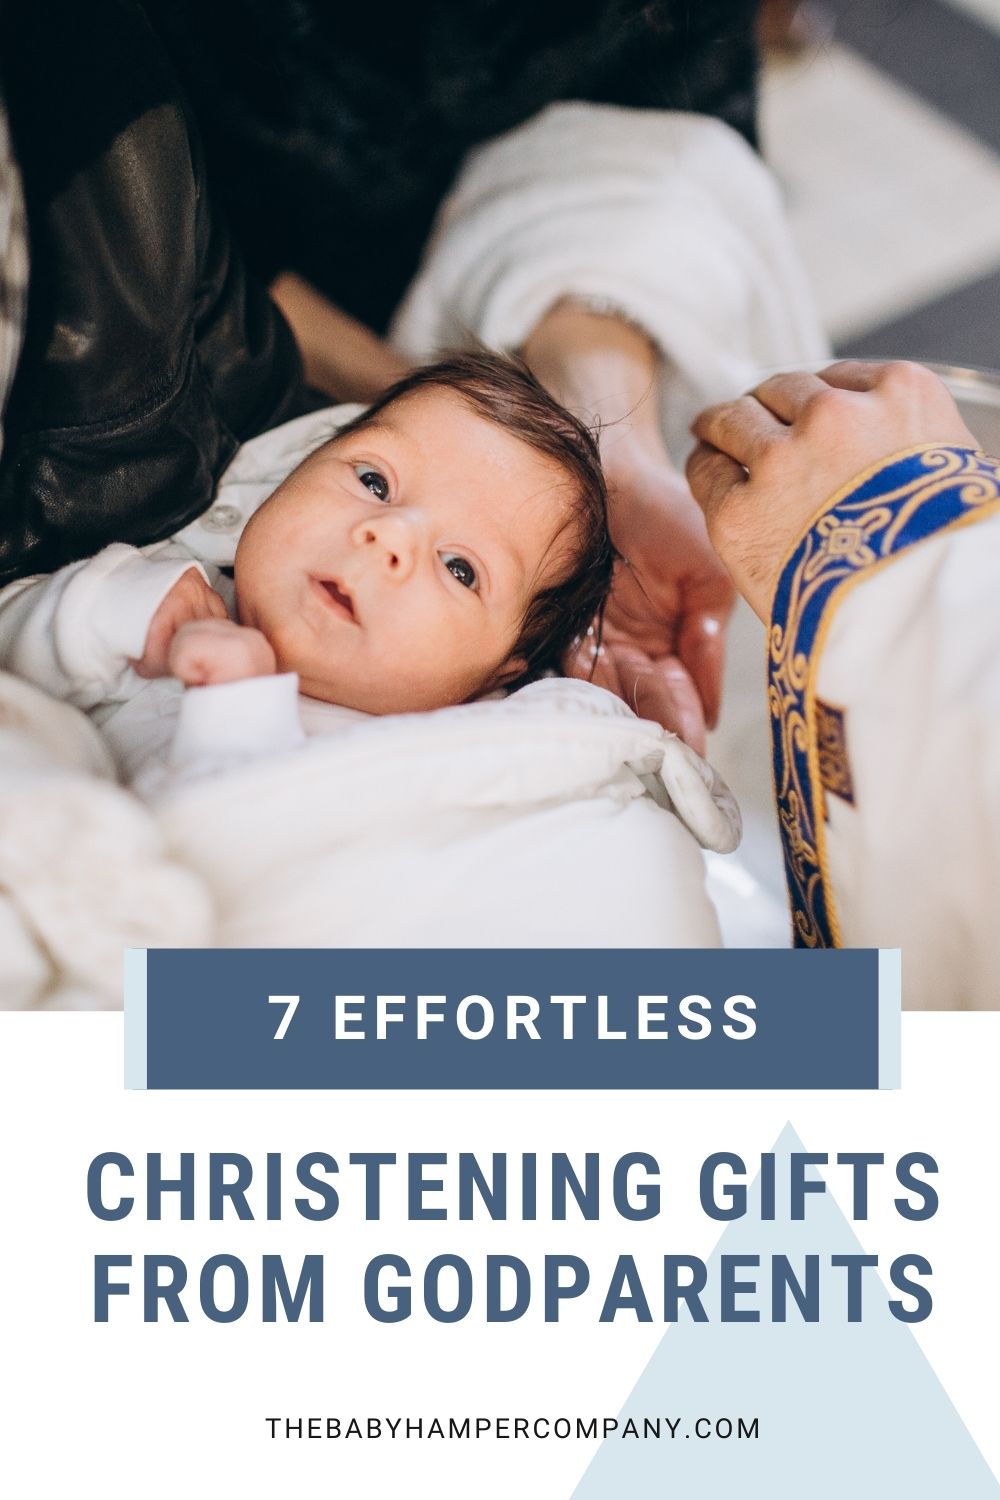 7 Effortless Christening Gifts